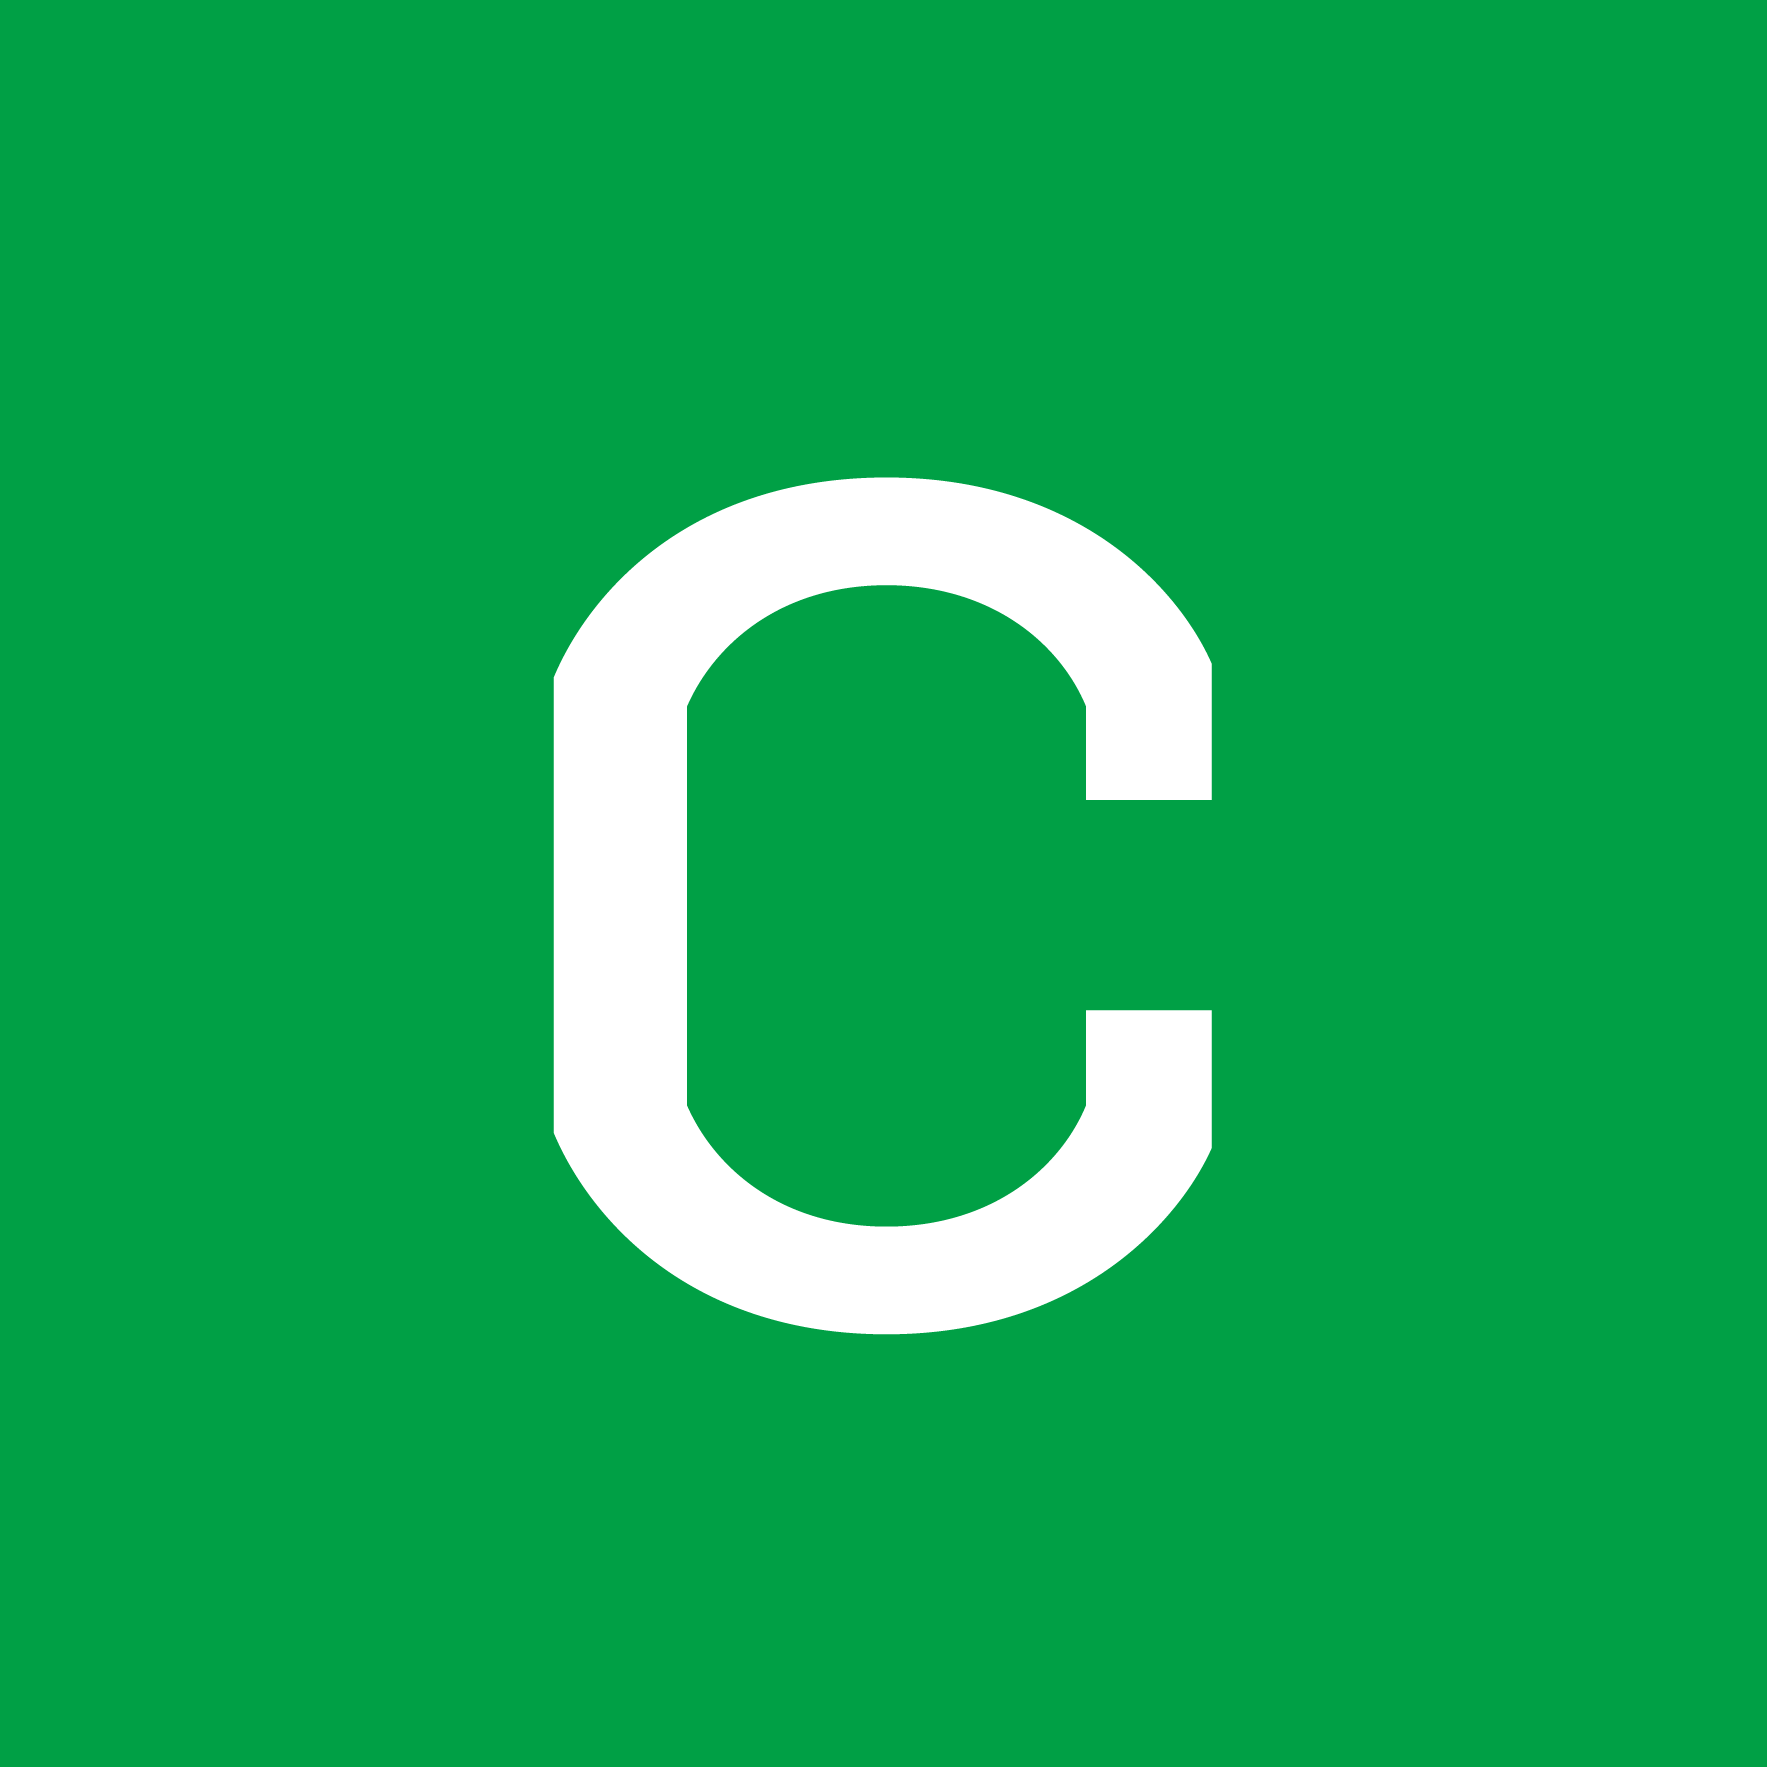 Capitalise square white on green logo